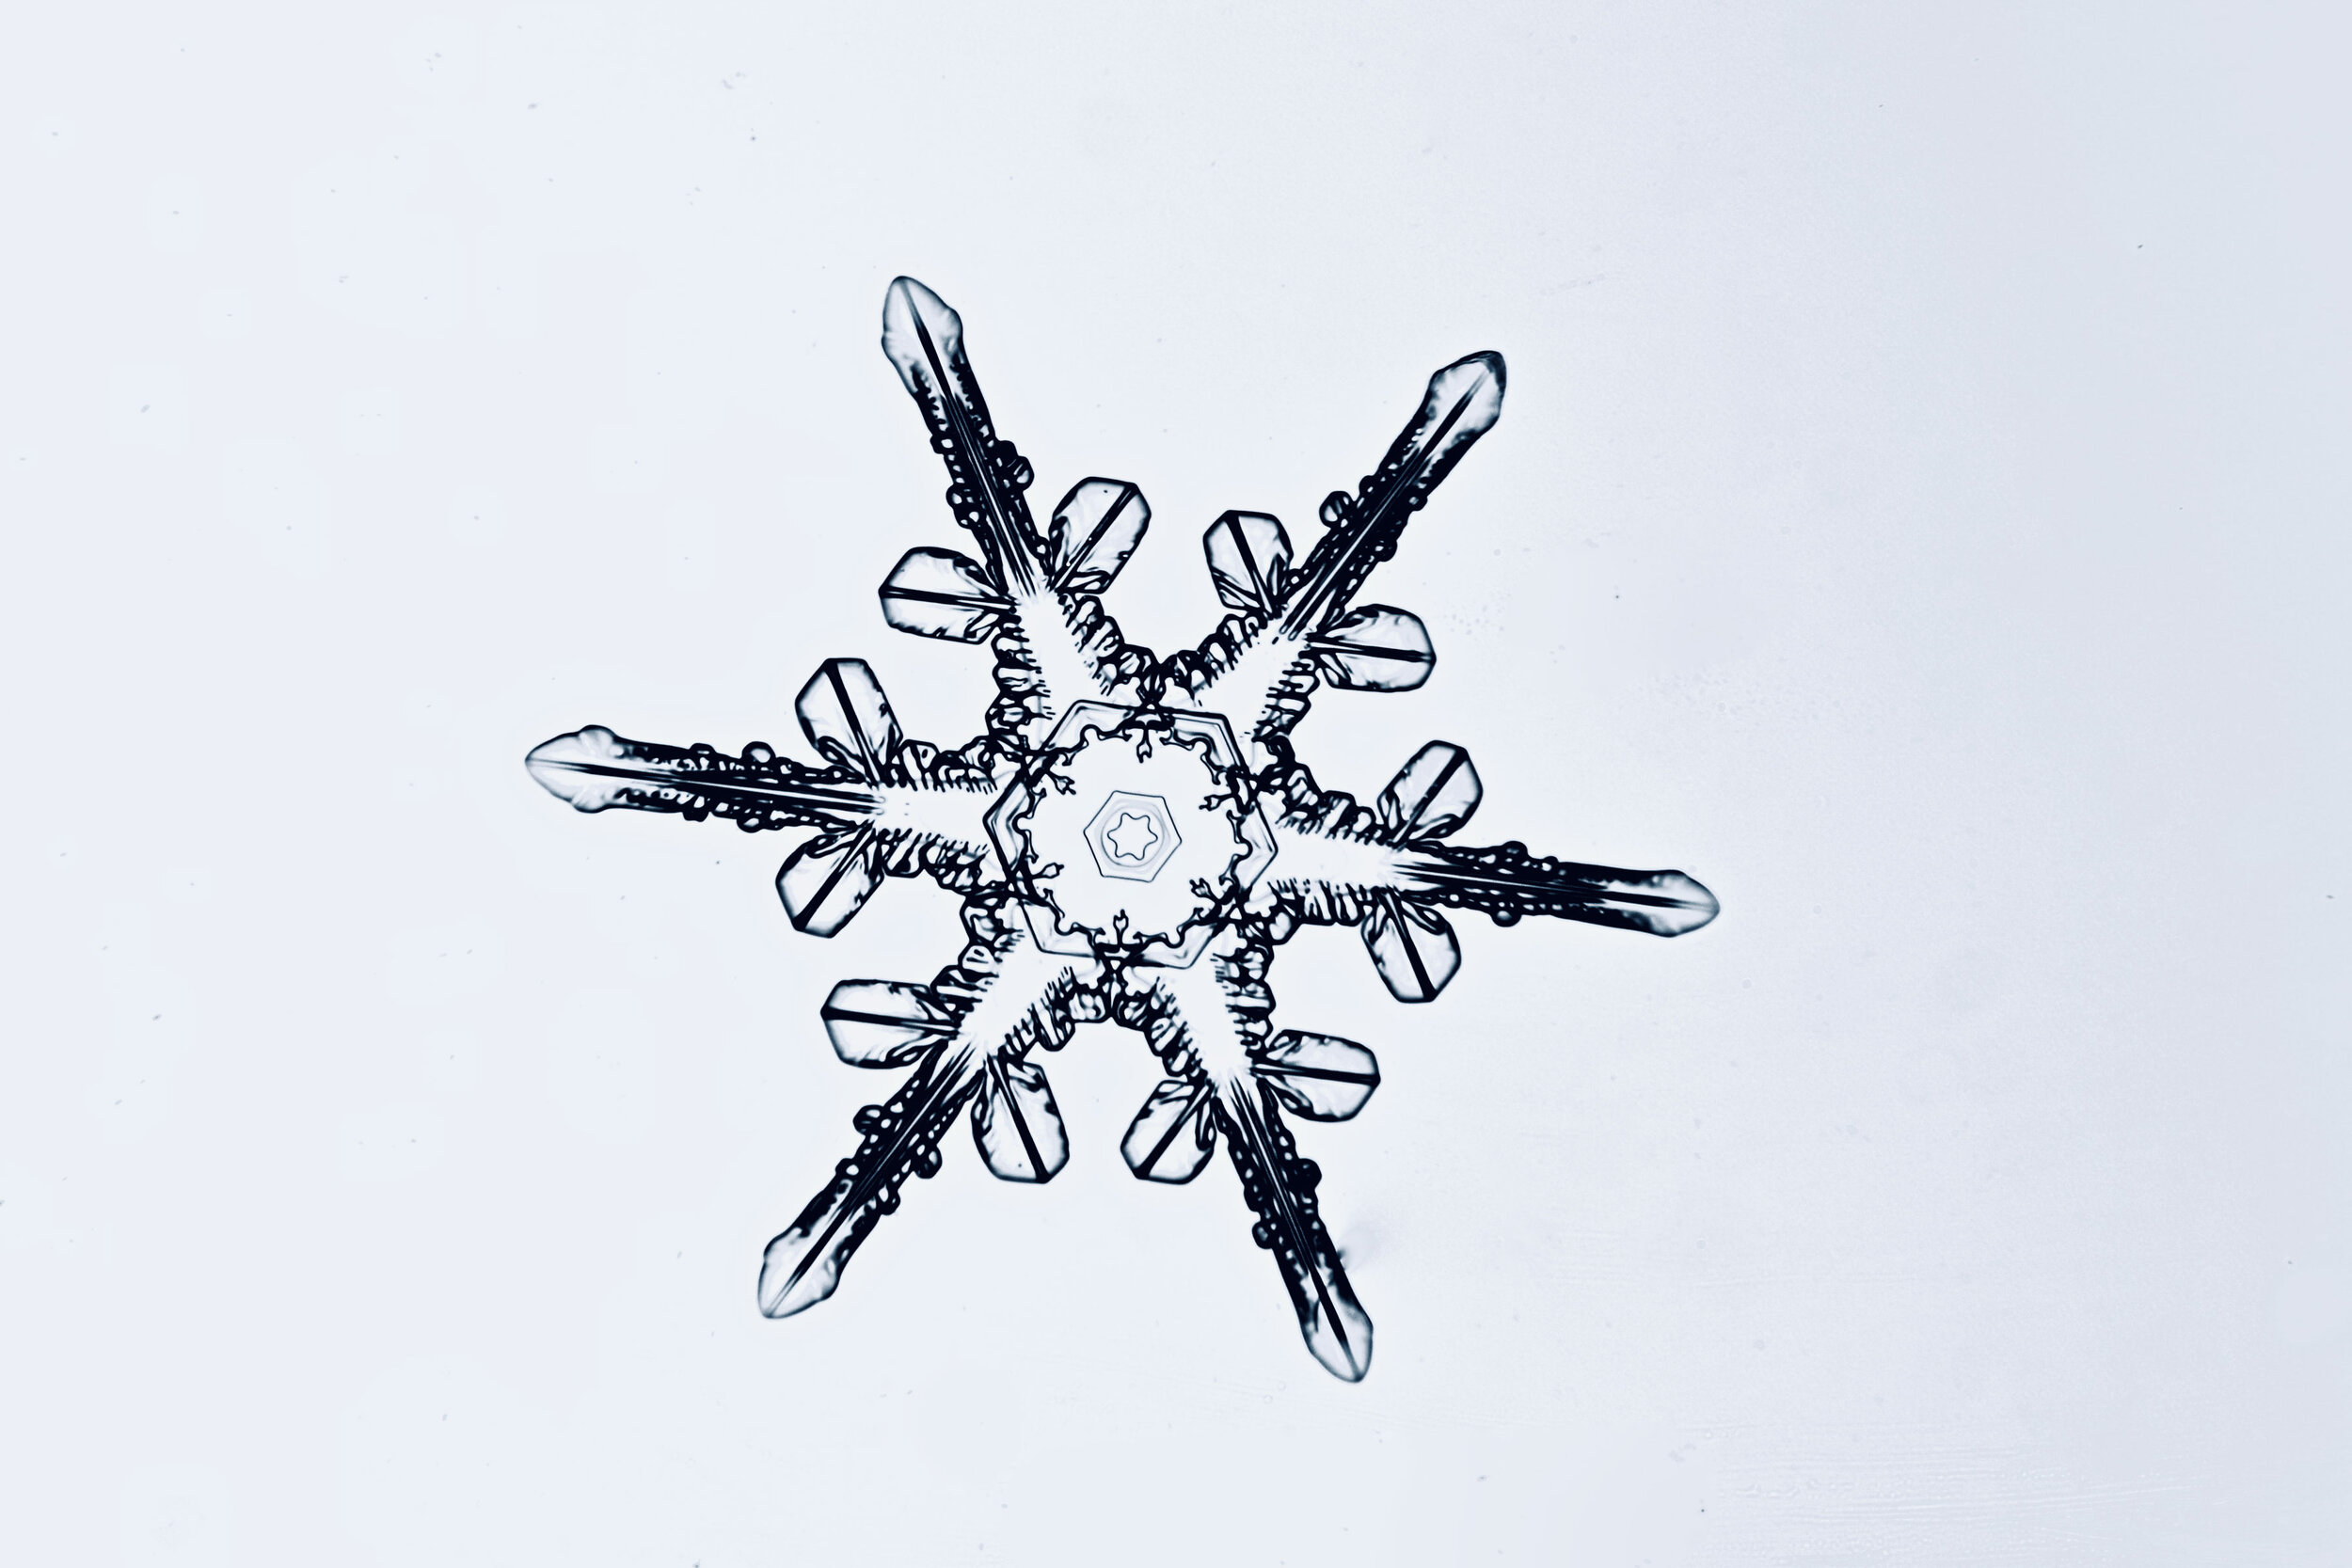 Gary-Mawe-Stellar-Crystal-Snowflake-07.jpg